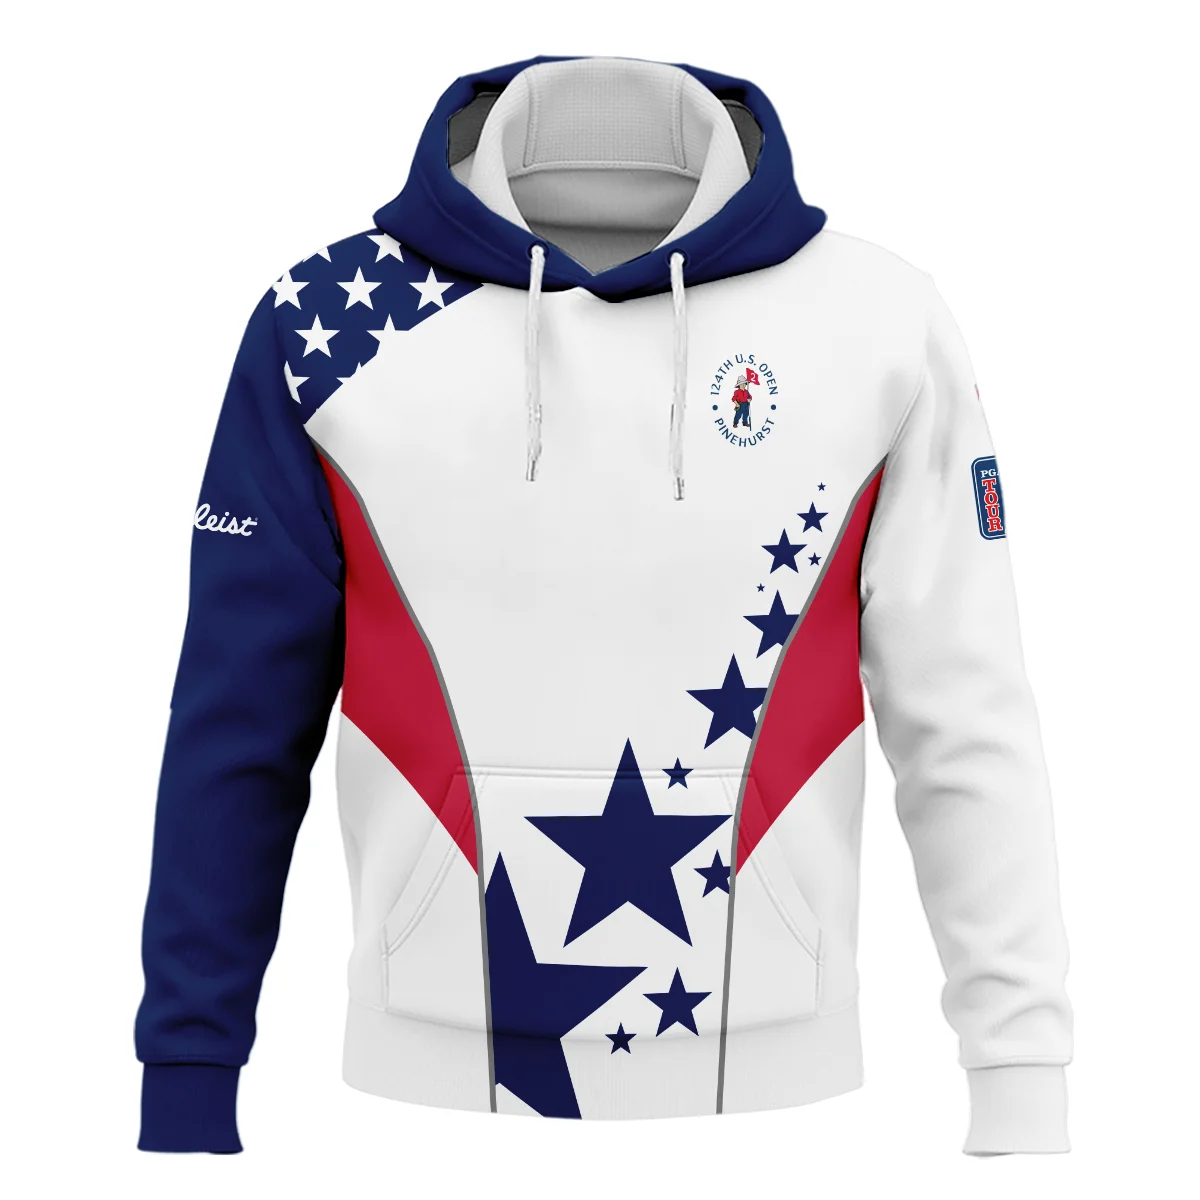 124th U.S. Open Pinehurst Titleist Stars US Flag White Blue Polo Shirt Style Classic Polo Shirt For Men